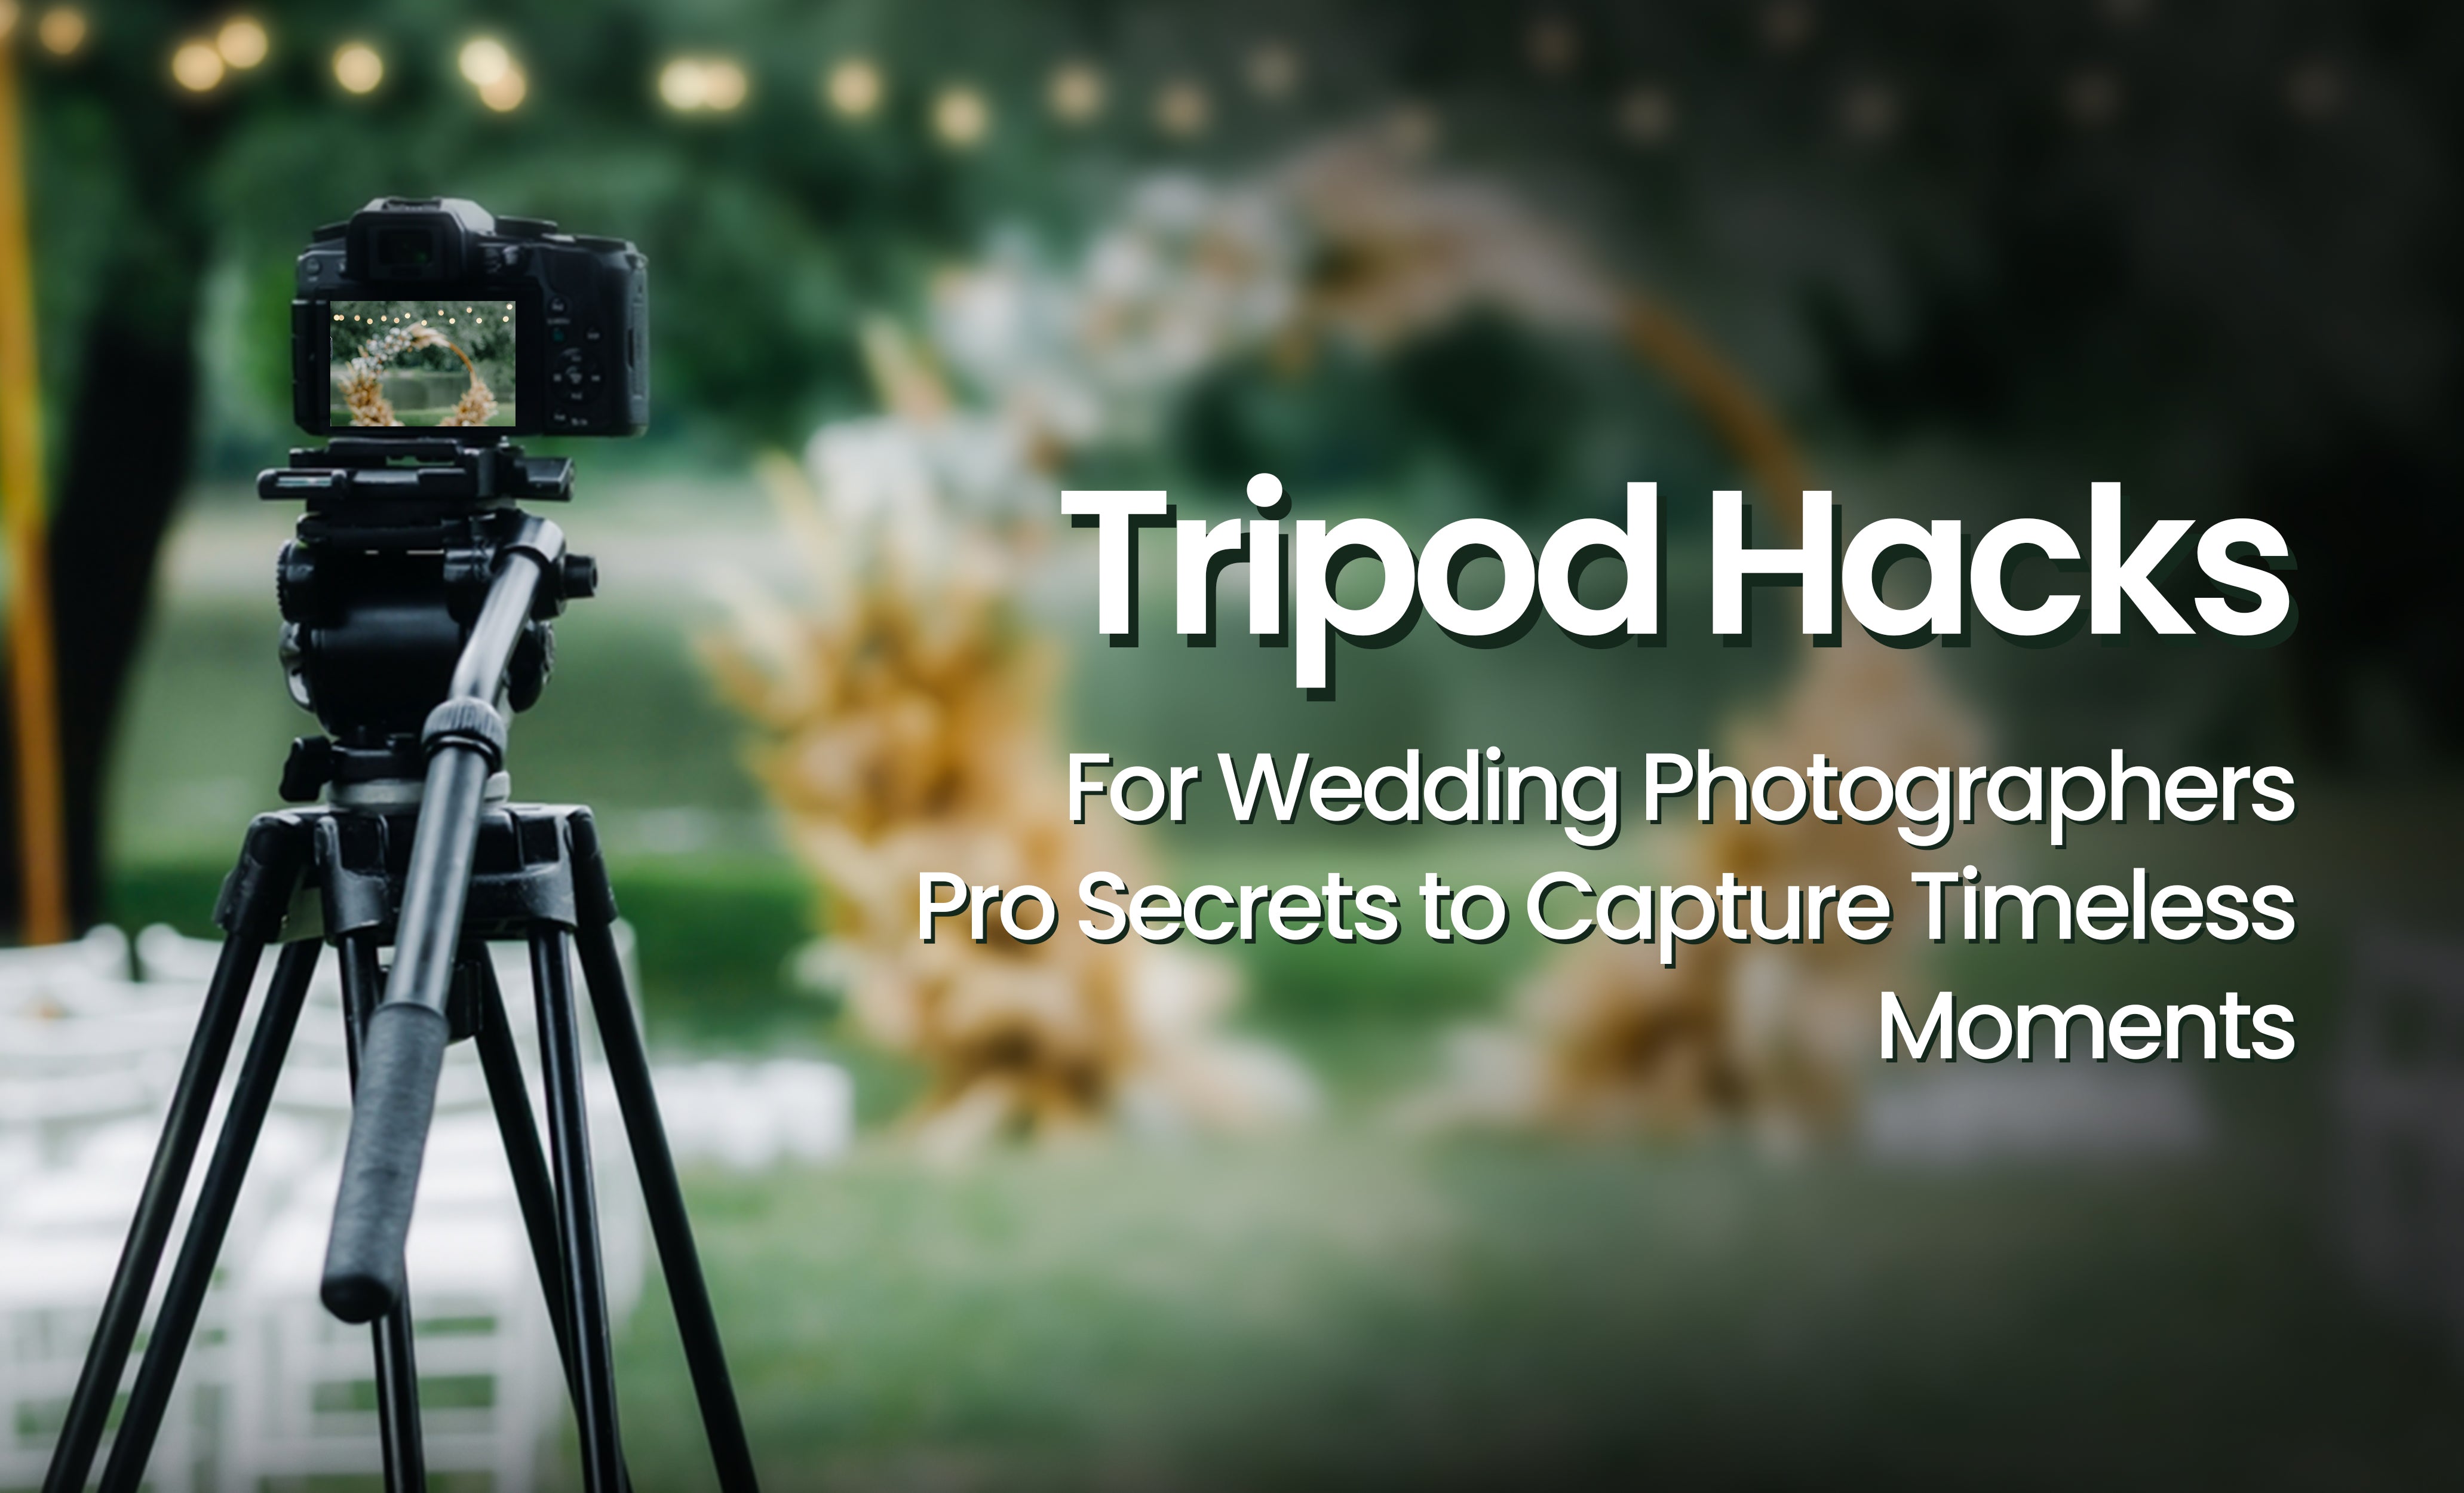 Tripod Hacks for Wedding Photographers: Pro Secrets to Capture Timeless Moments